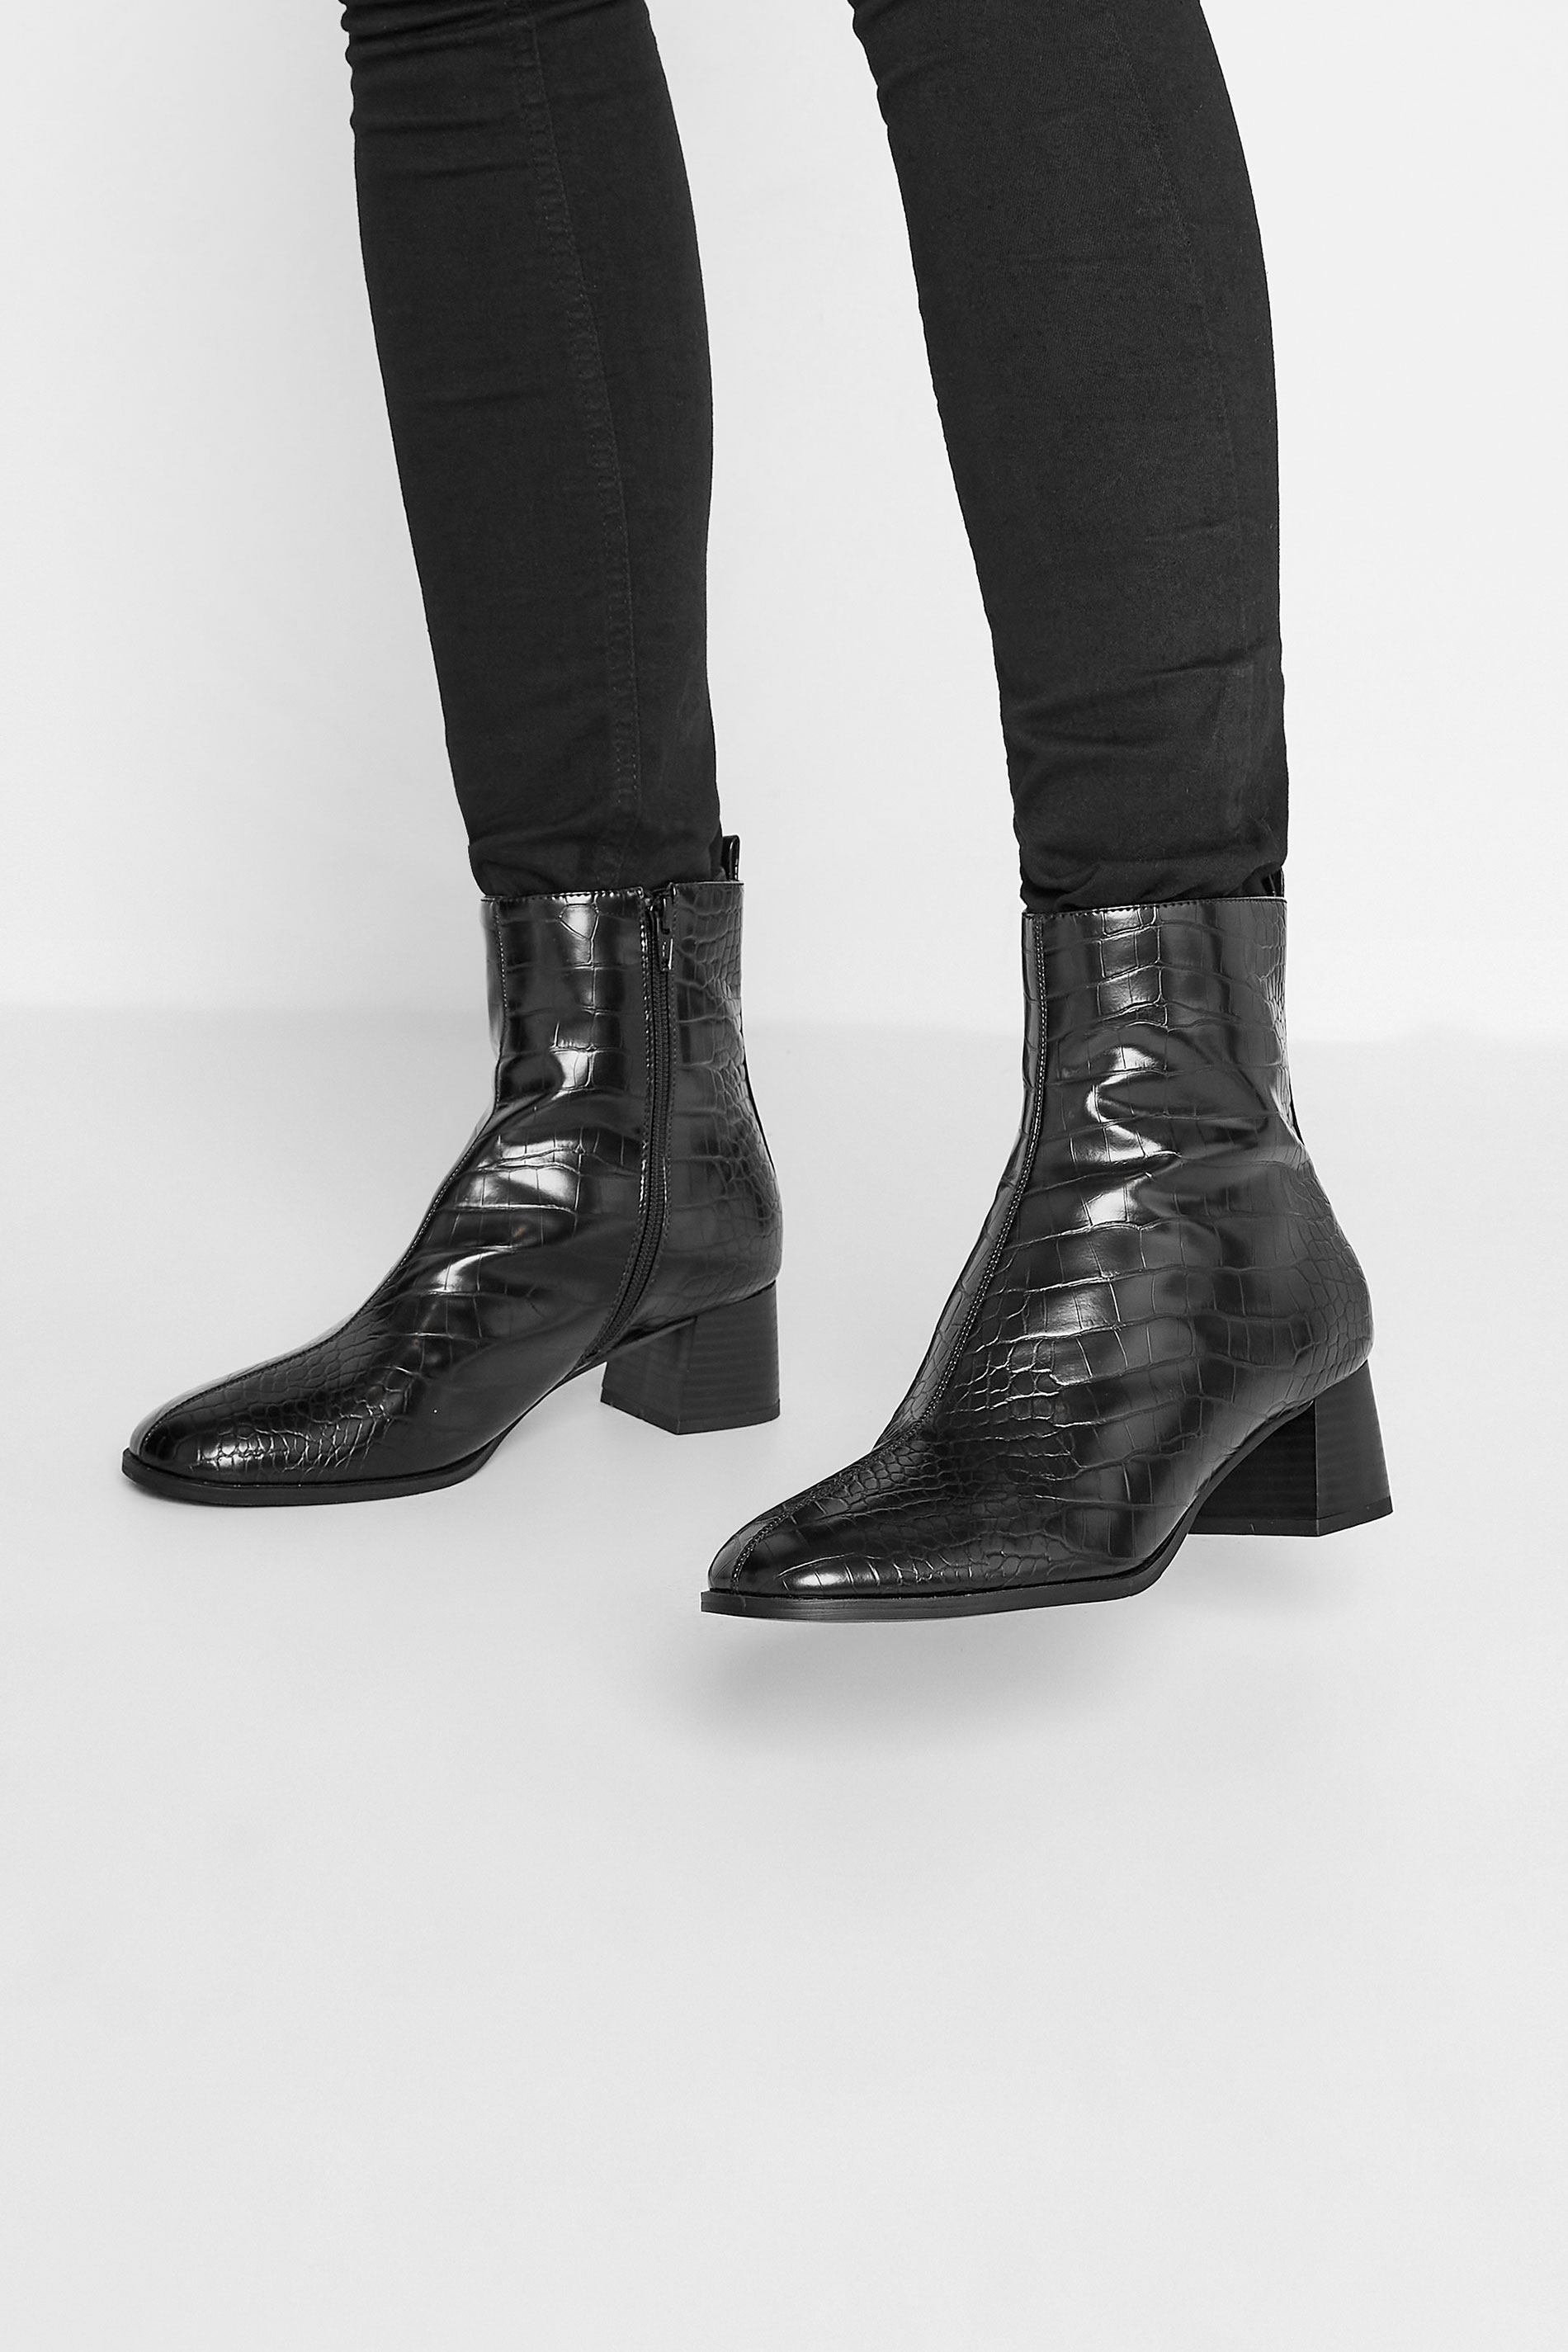 LTS Black Croc Block Heel Boots In Standard Fit| Long Tall Sally 1